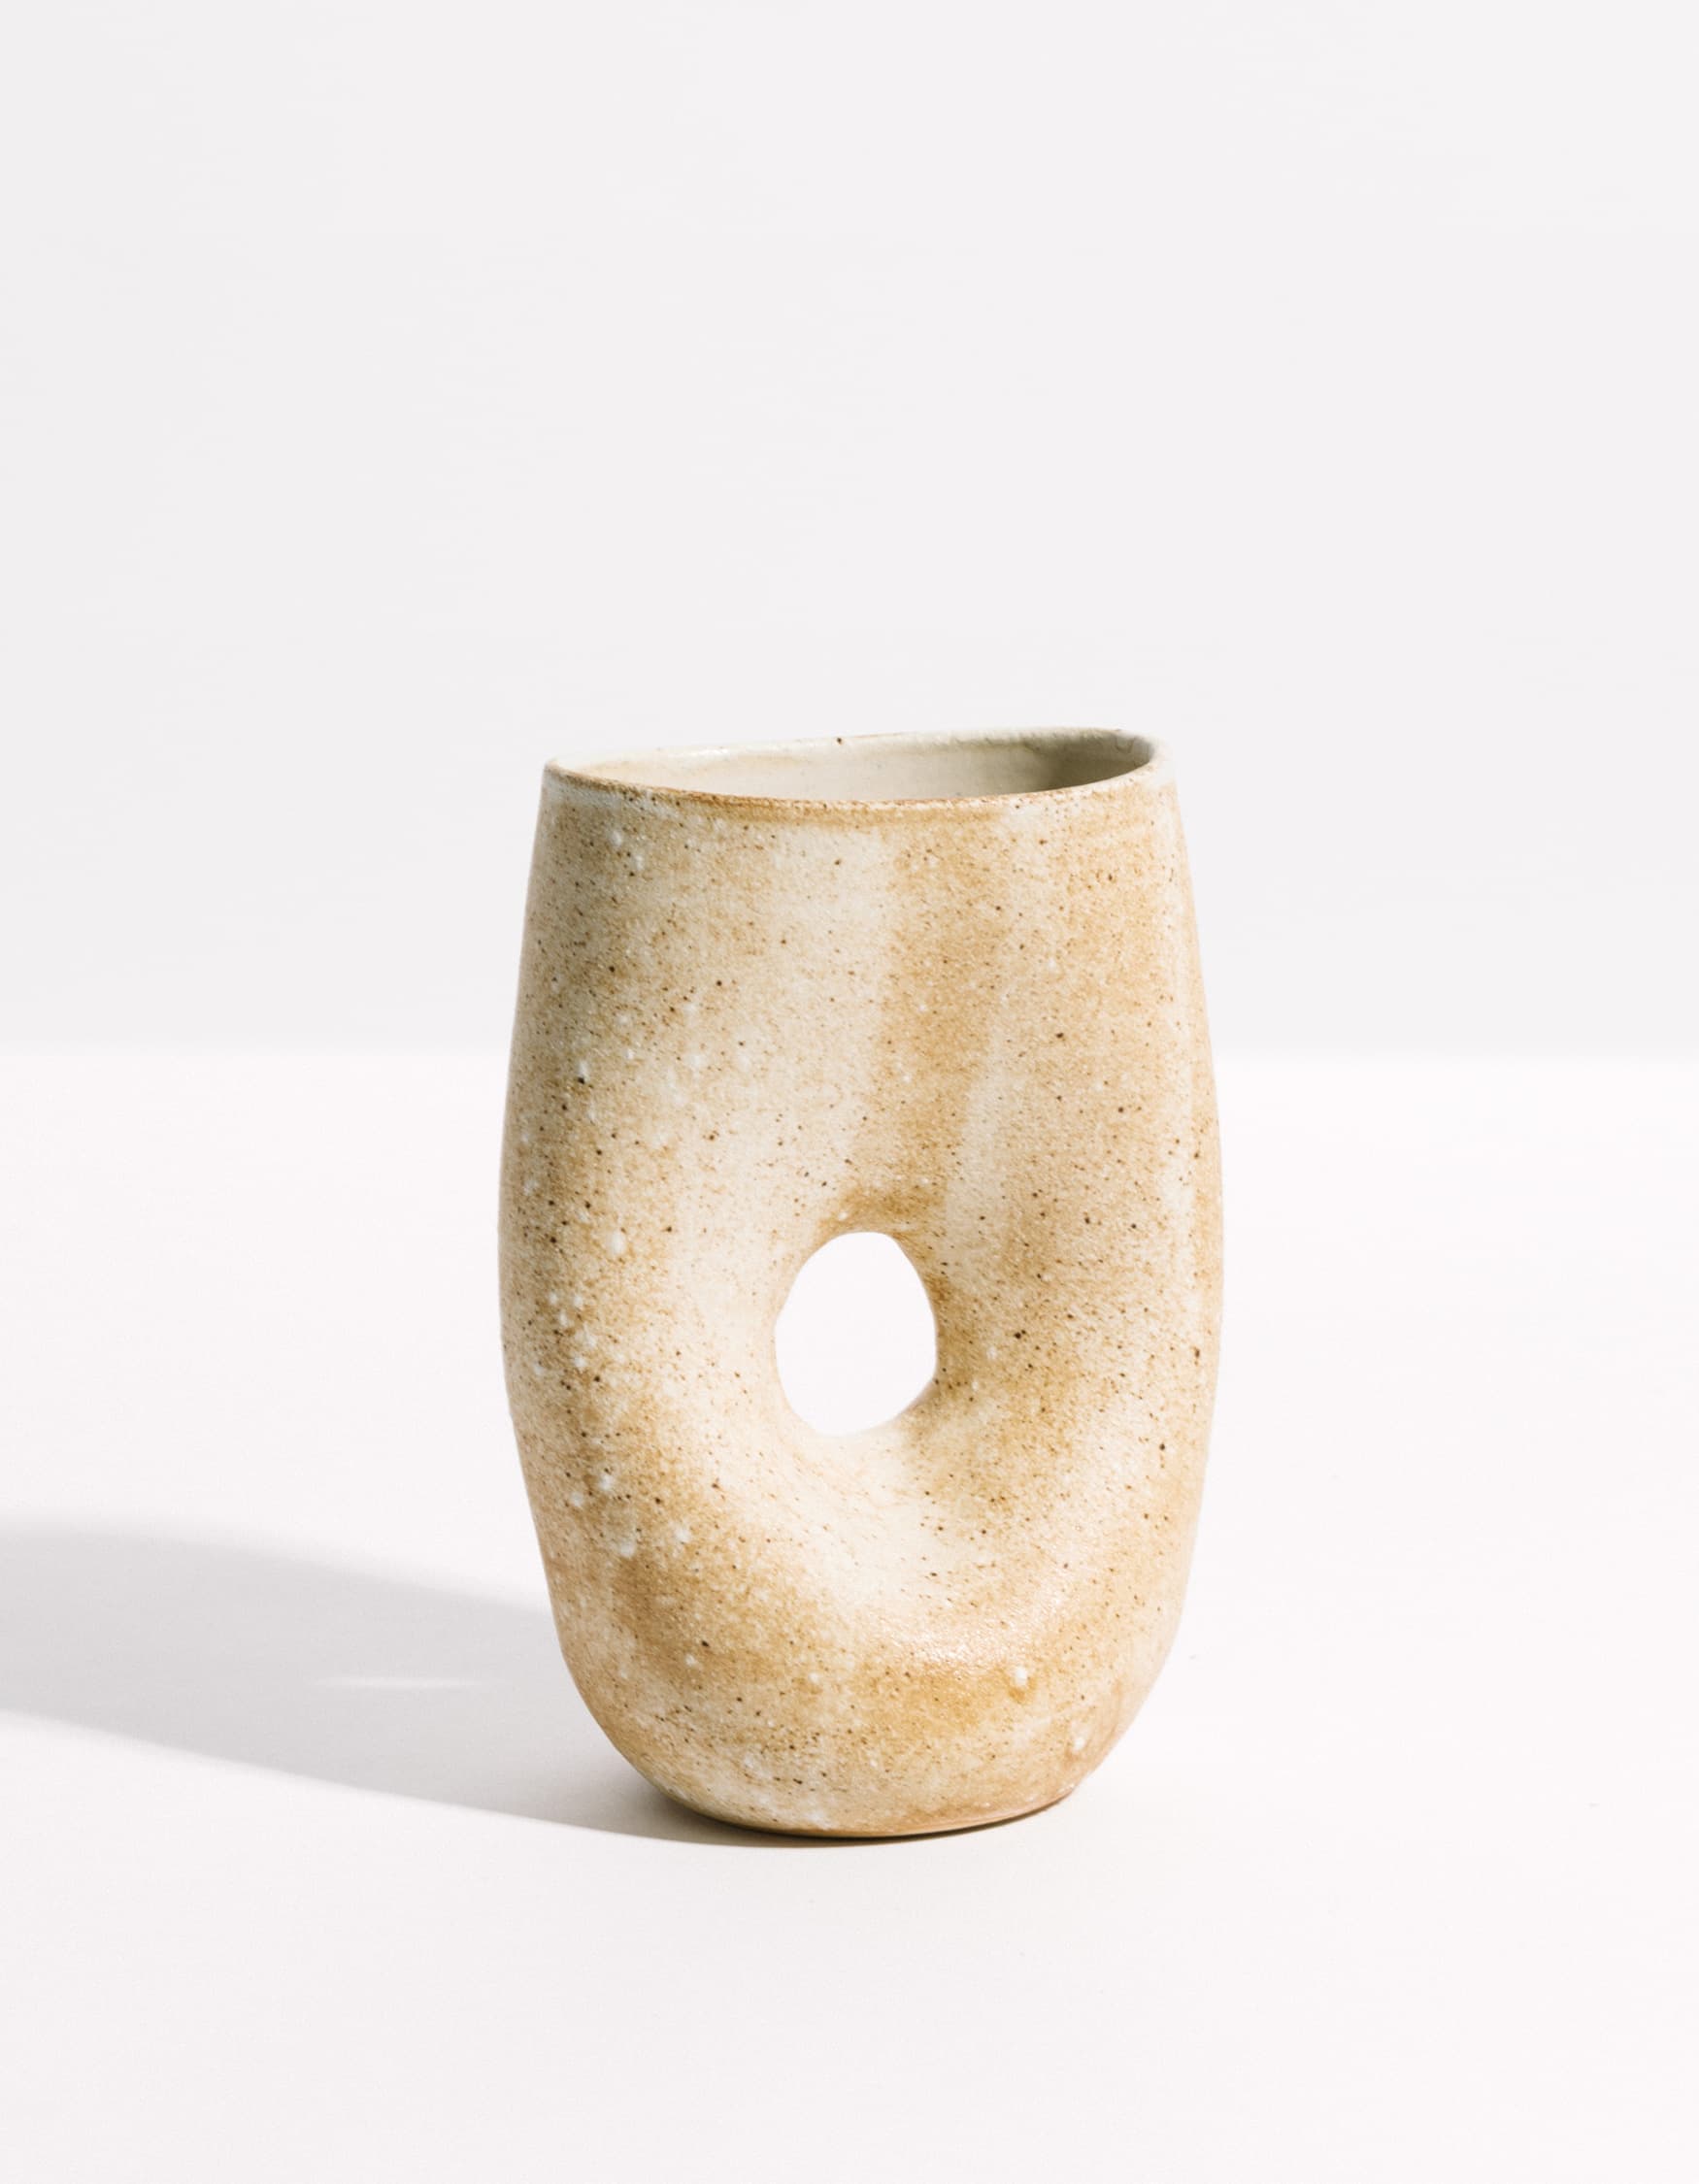 Sandstone Vase No. 4